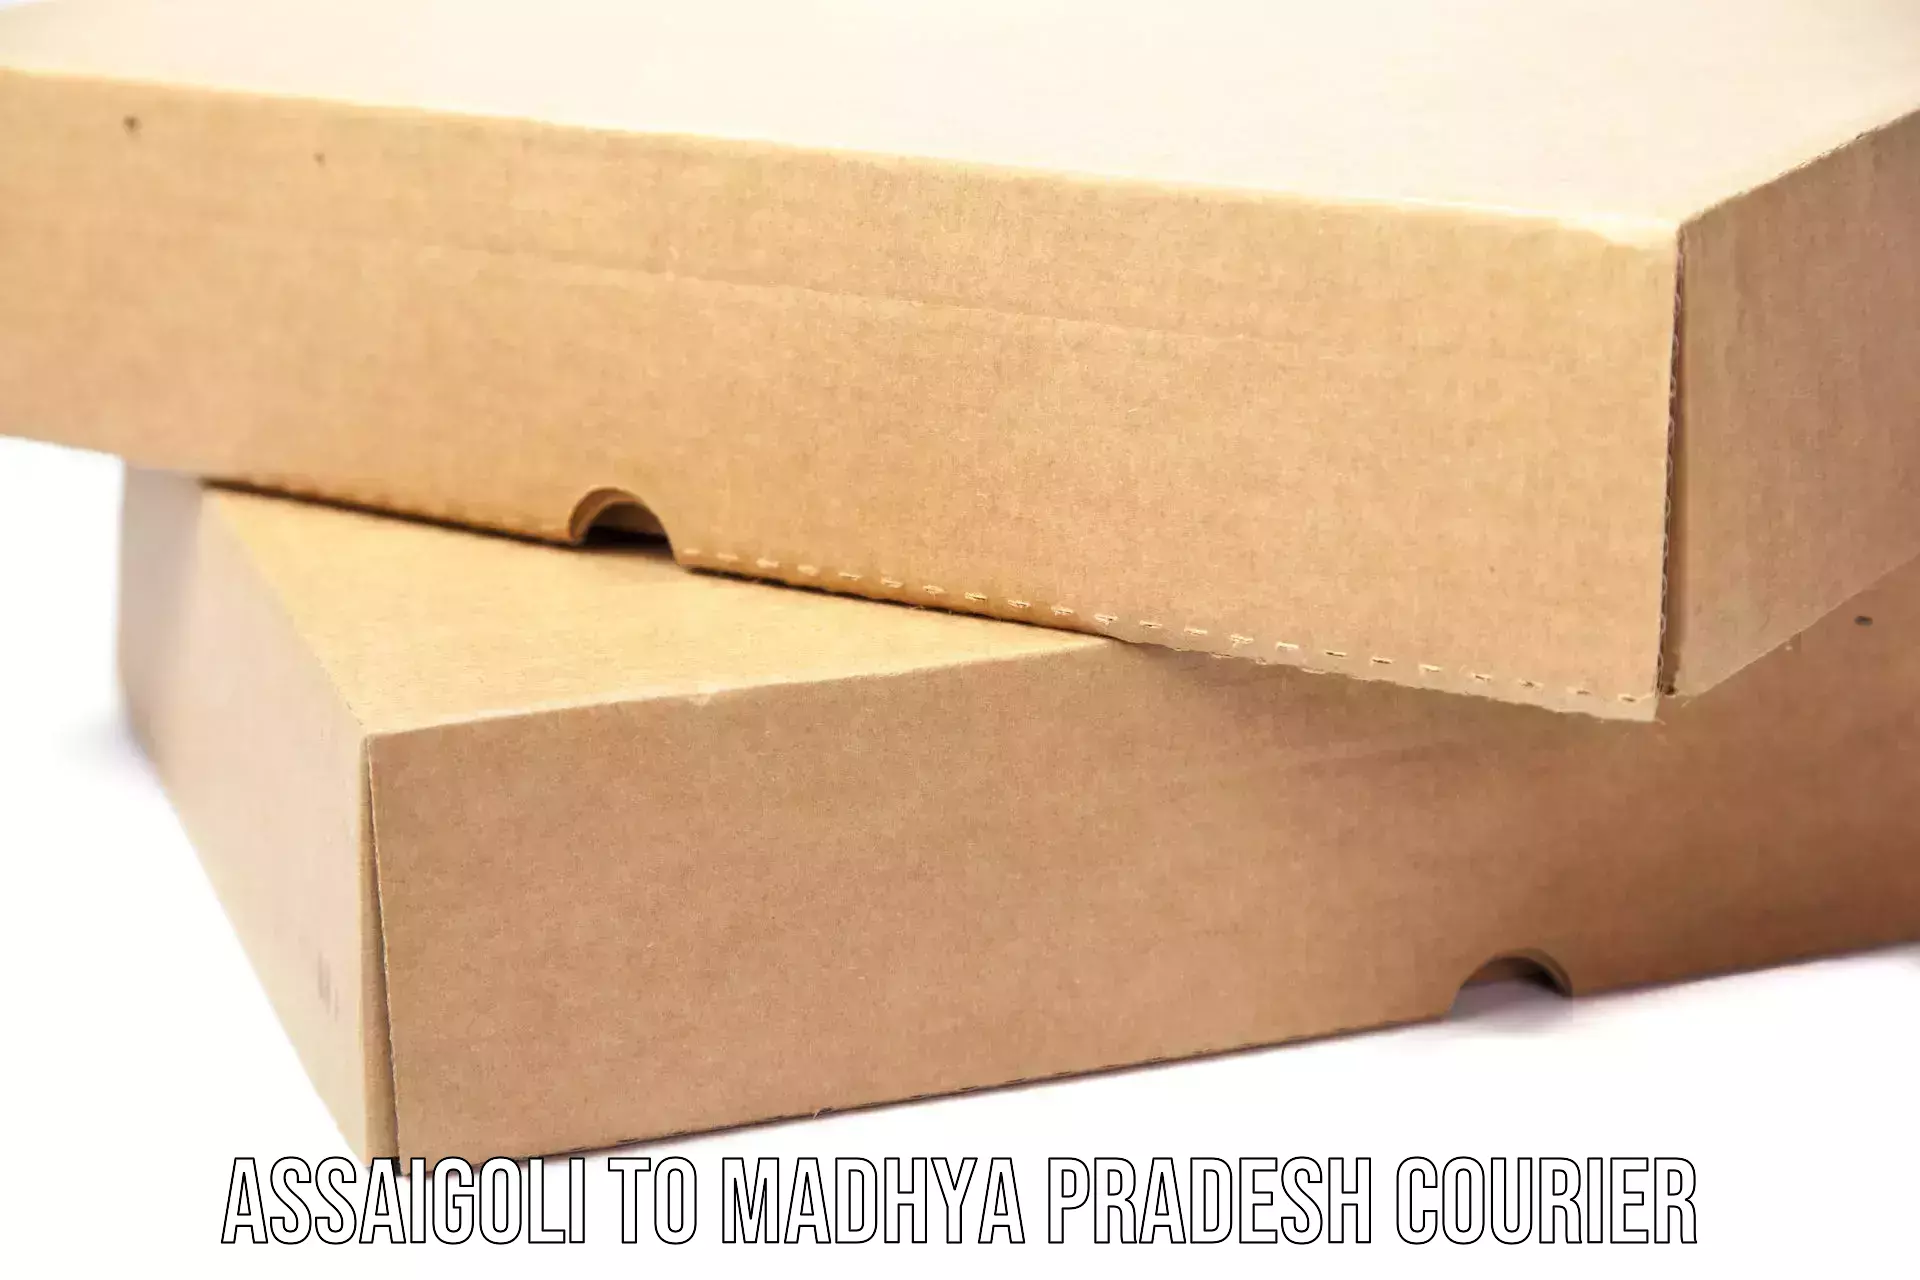 Corporate courier solutions Assaigoli to Madhya Pradesh